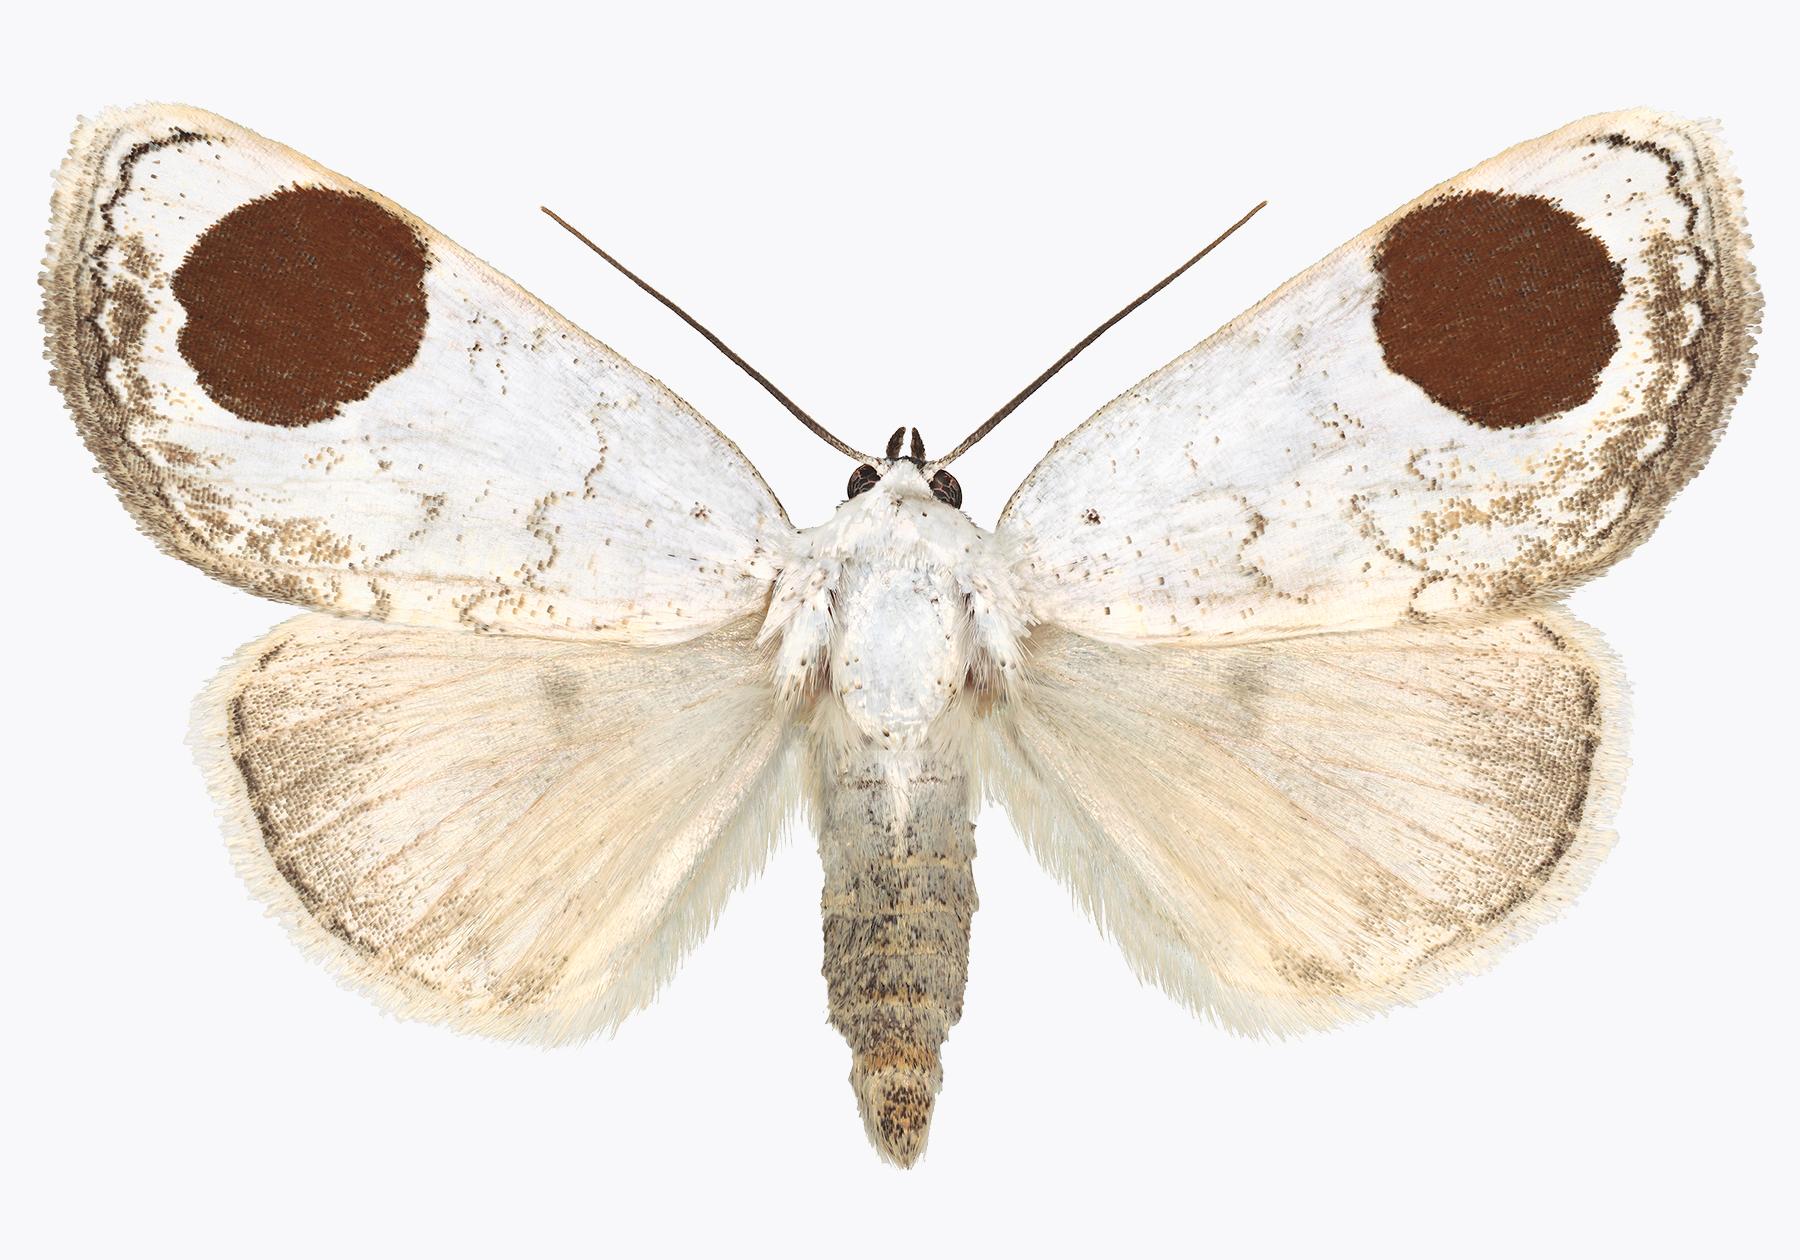 Color Photograph Joseph Scheer - Sphragifera Sigillata, White, Brown, Beige Moth, Winged Insect Nature Photograph